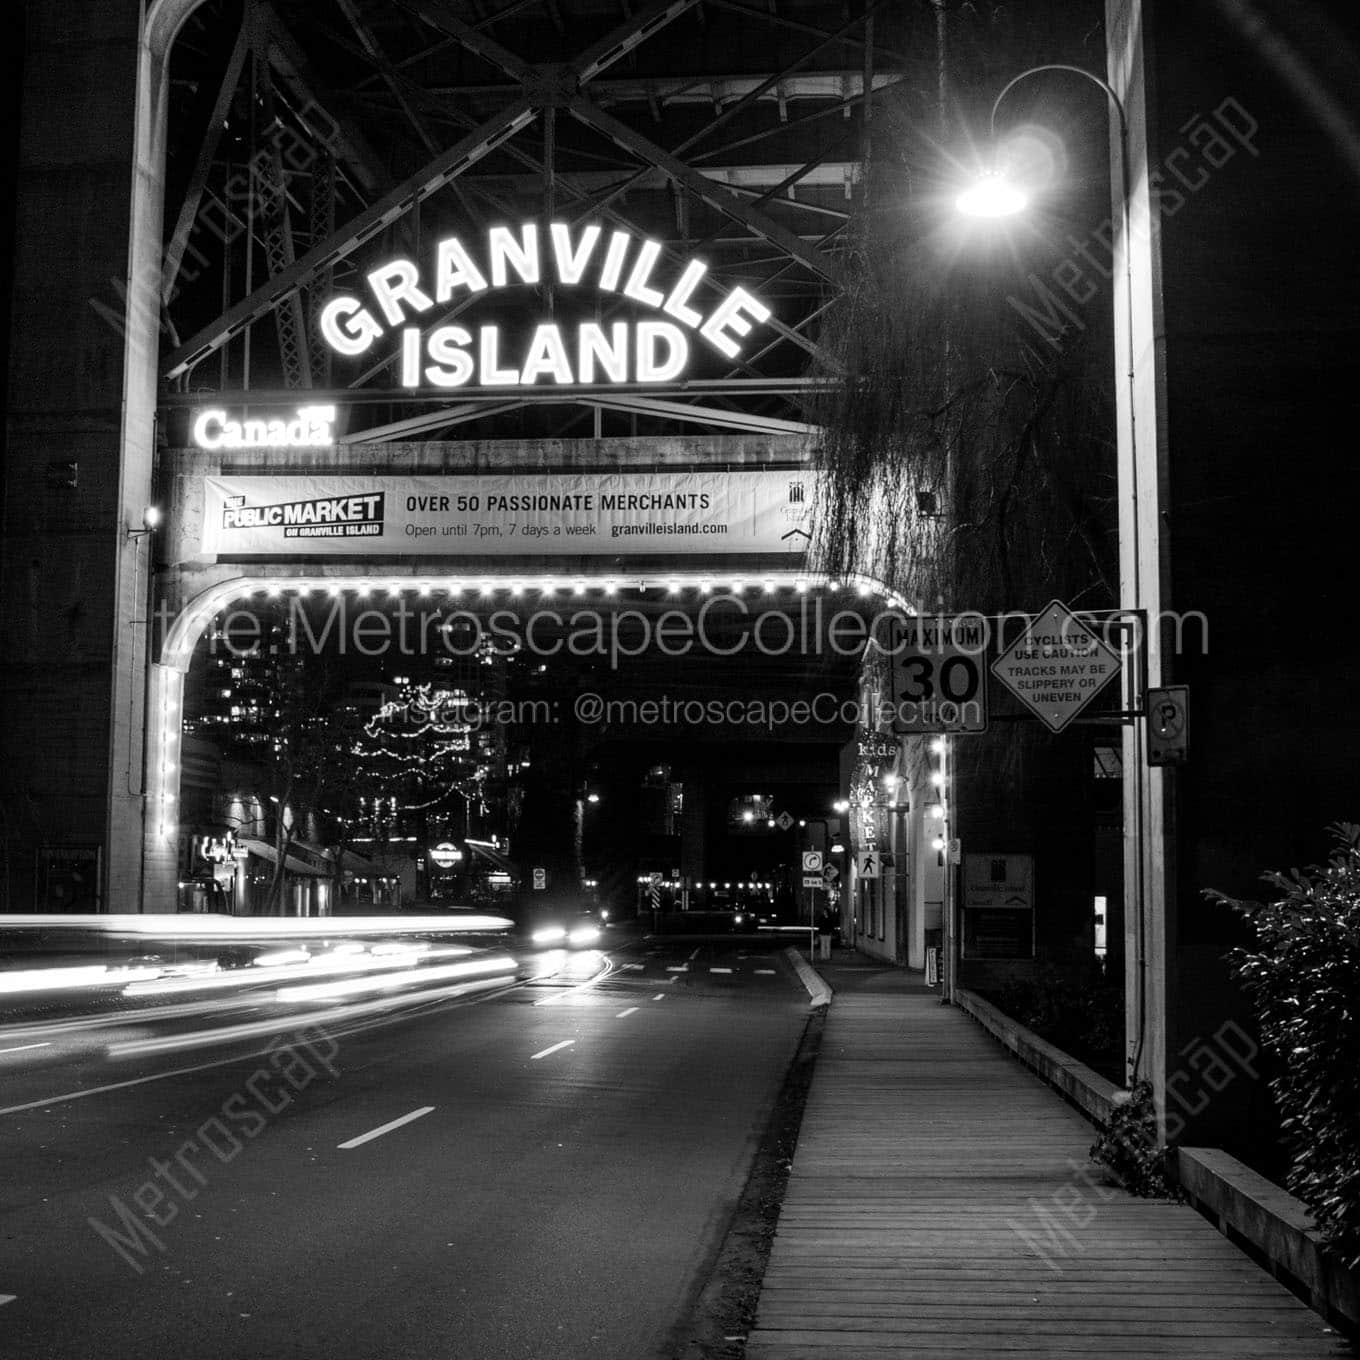 granville island sign at night Black & White Office Art